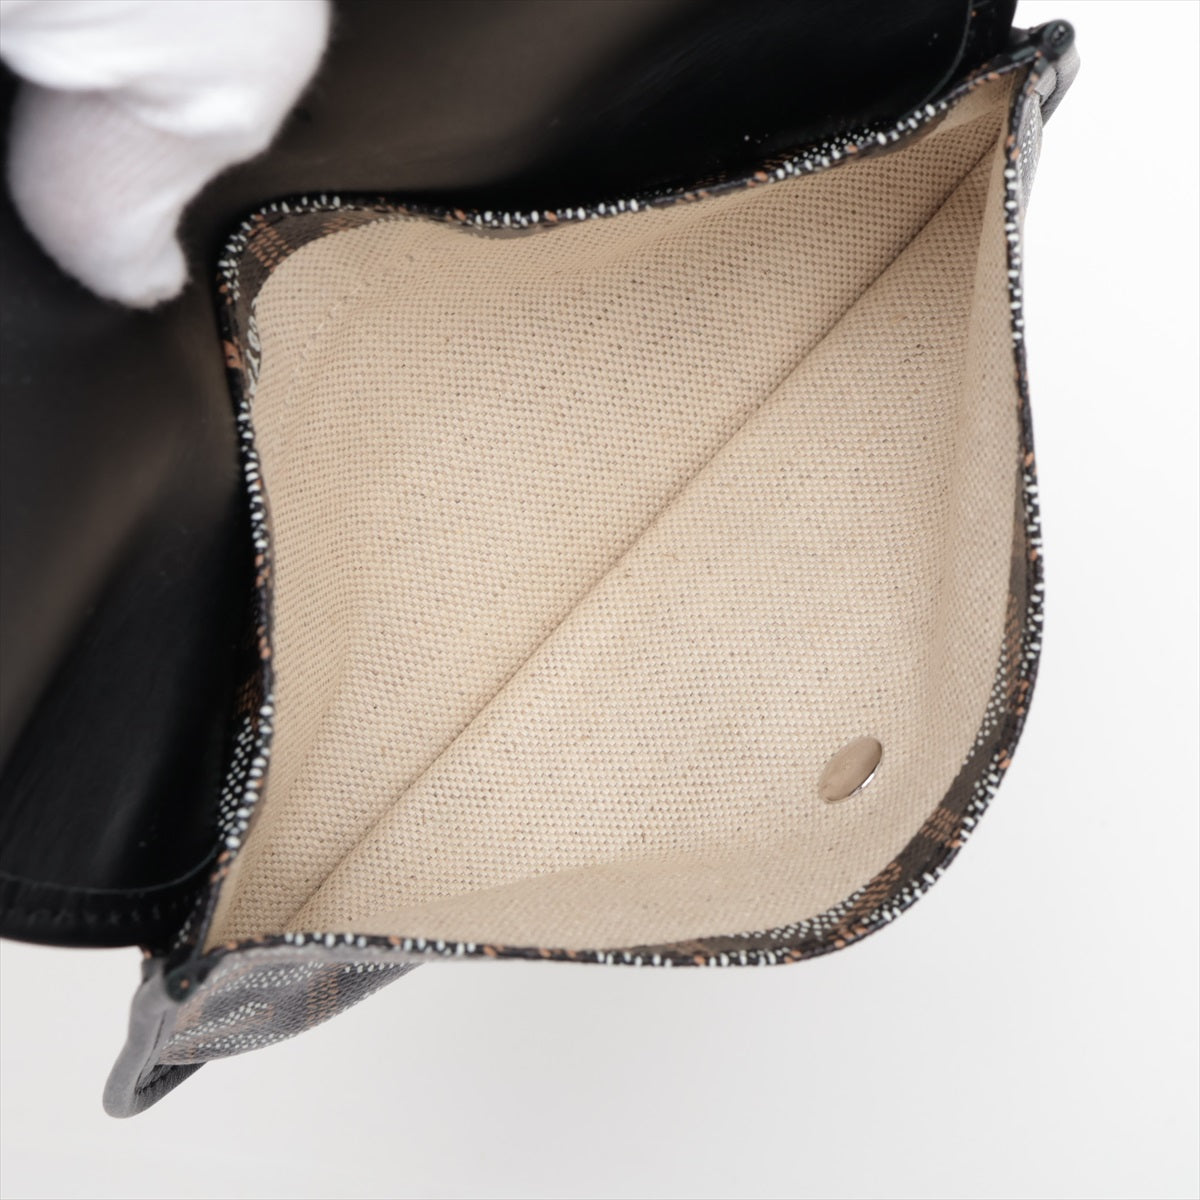 Goyar Sun-Lype PM PVC Leather  Bag Black